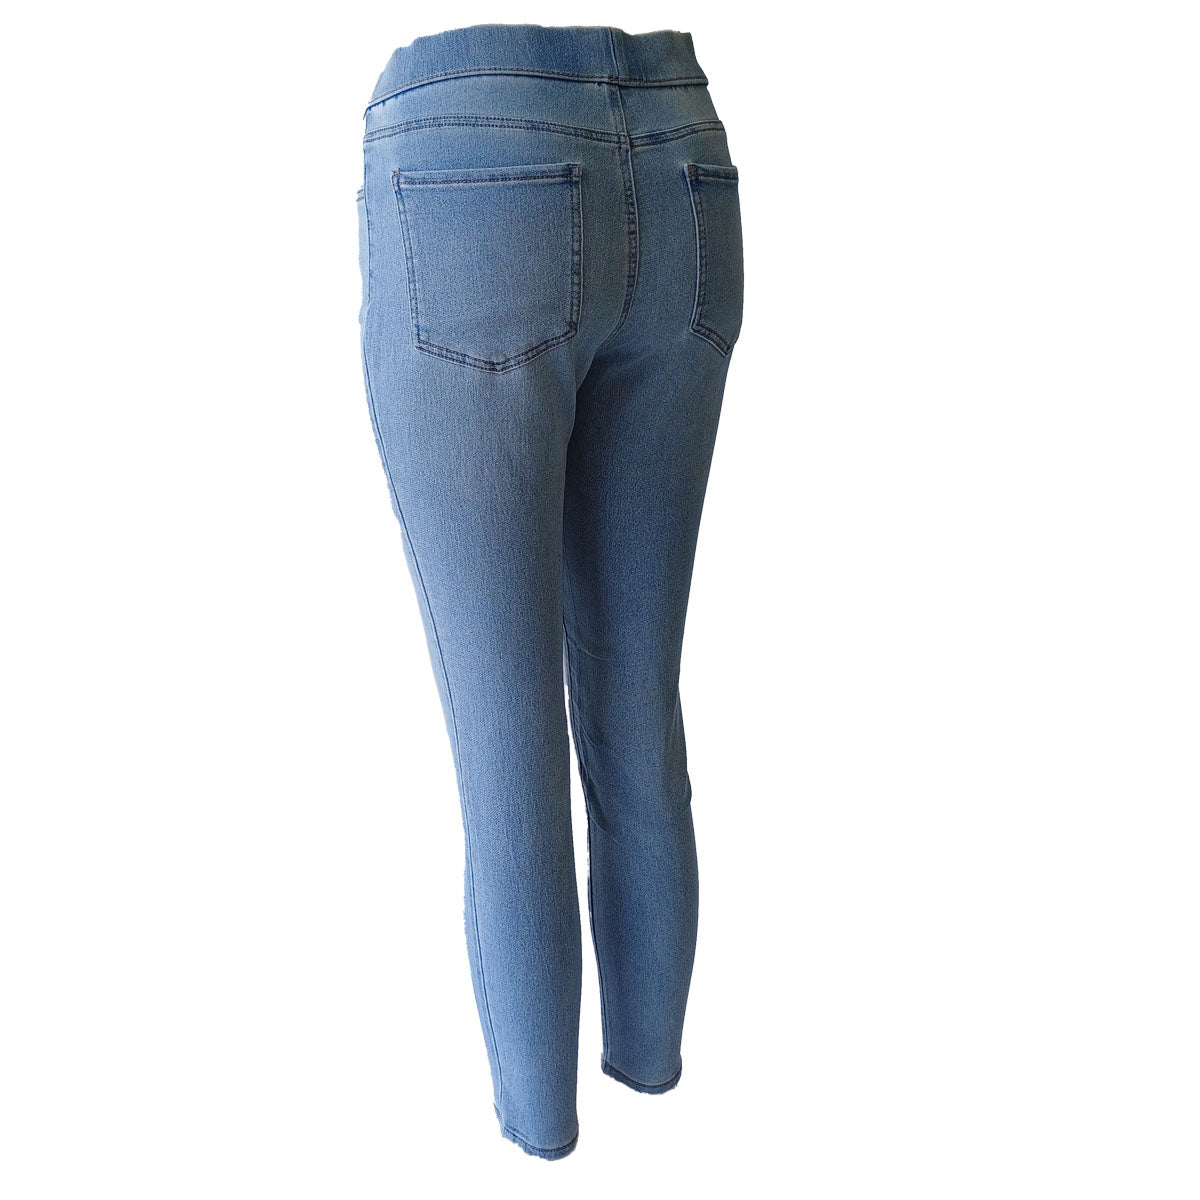 Light blue wash Denim stretch pull-on jeans